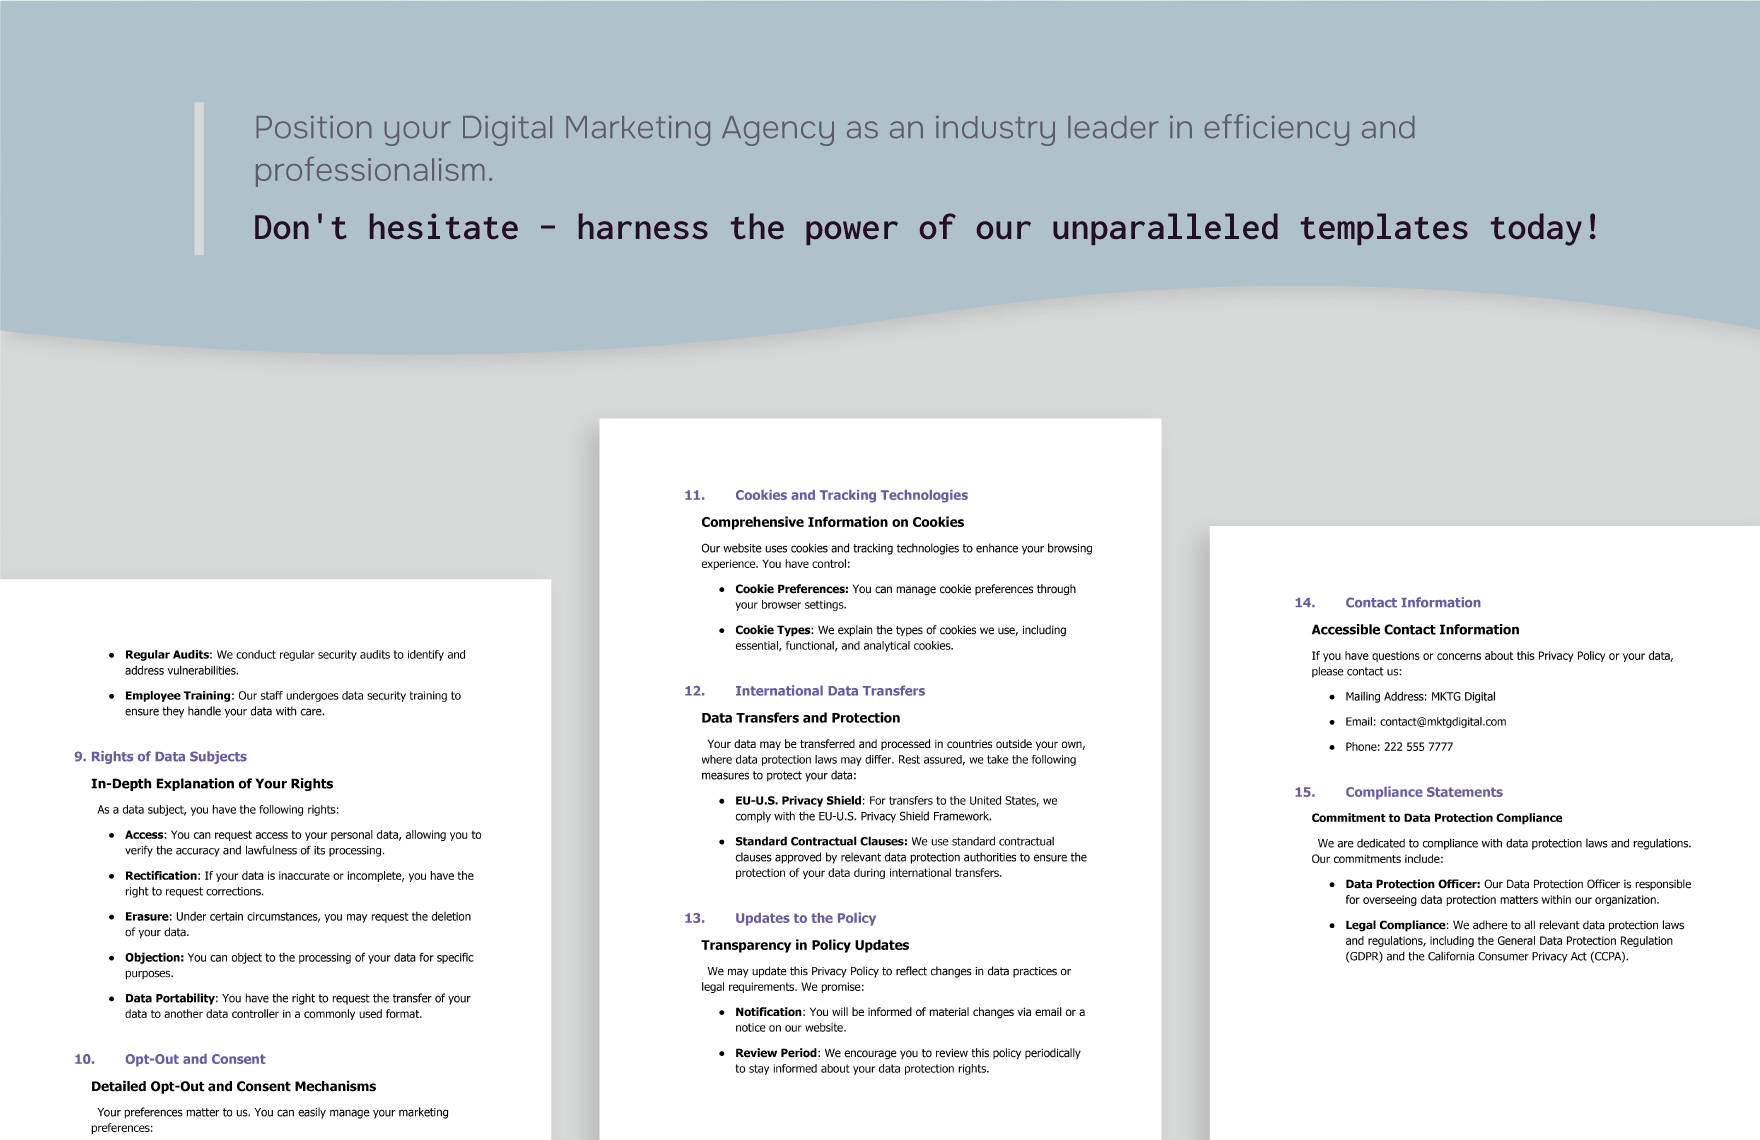 Digital Marketing Agency Customer Data Privacy Policy Template